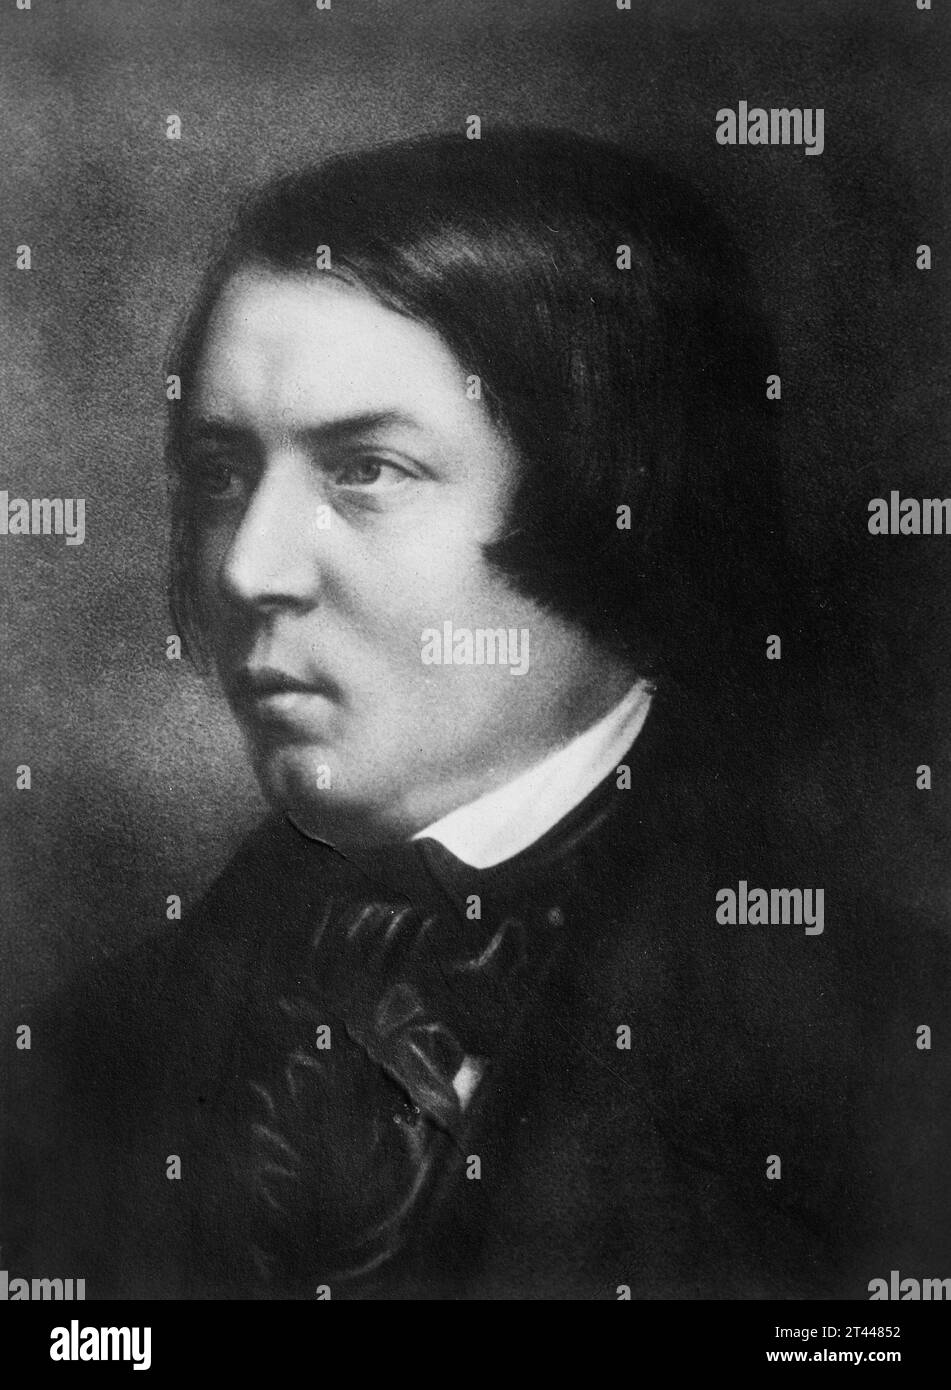 Robert Schumann. Portrait du compositeur et pianiste allemand Robert Schumann (1810-1856) Banque D'Images